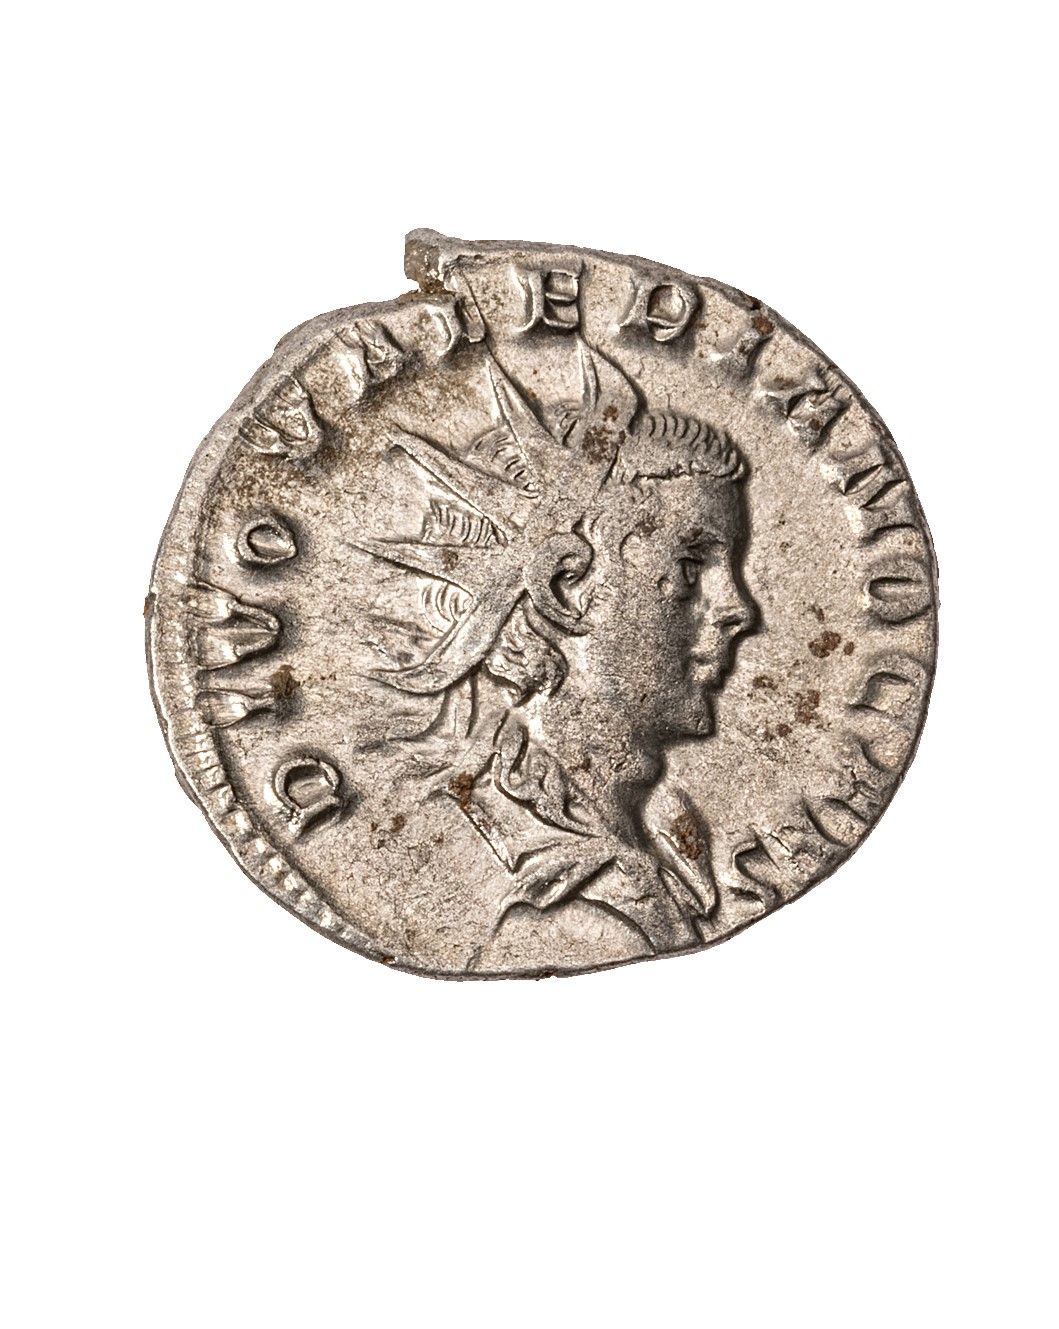 Null VALERIAN II (257-258) 

Antoninian 

A/ DIVO VALERIANO CAES 

R/ CONSECRATI&hellip;